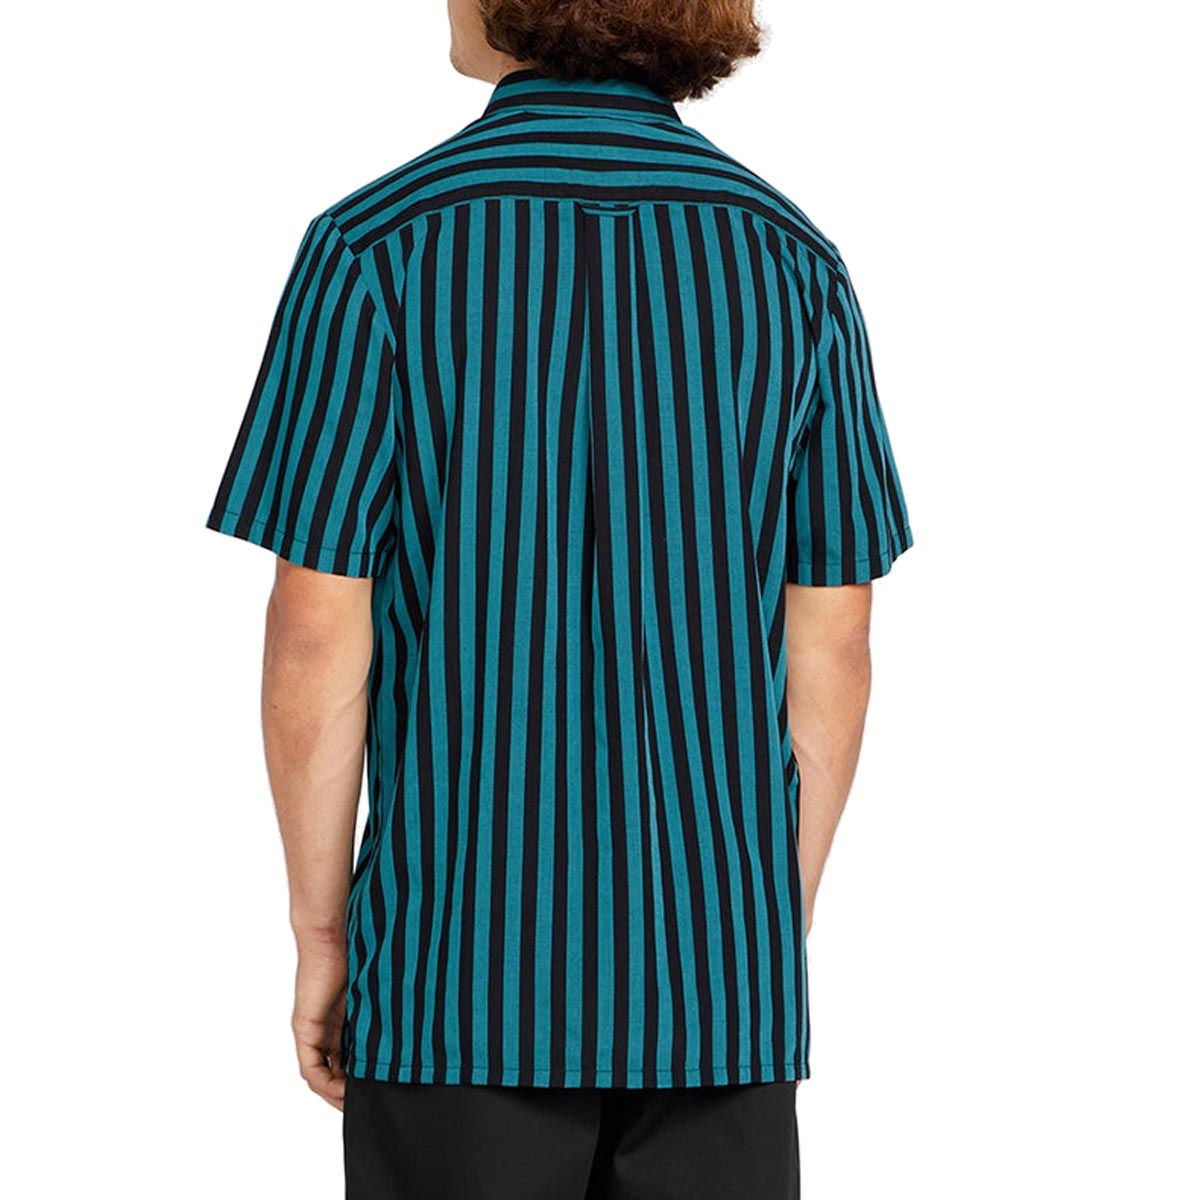 Volcom x Schroff Stripe Shirt - Dusty Aqua image 2